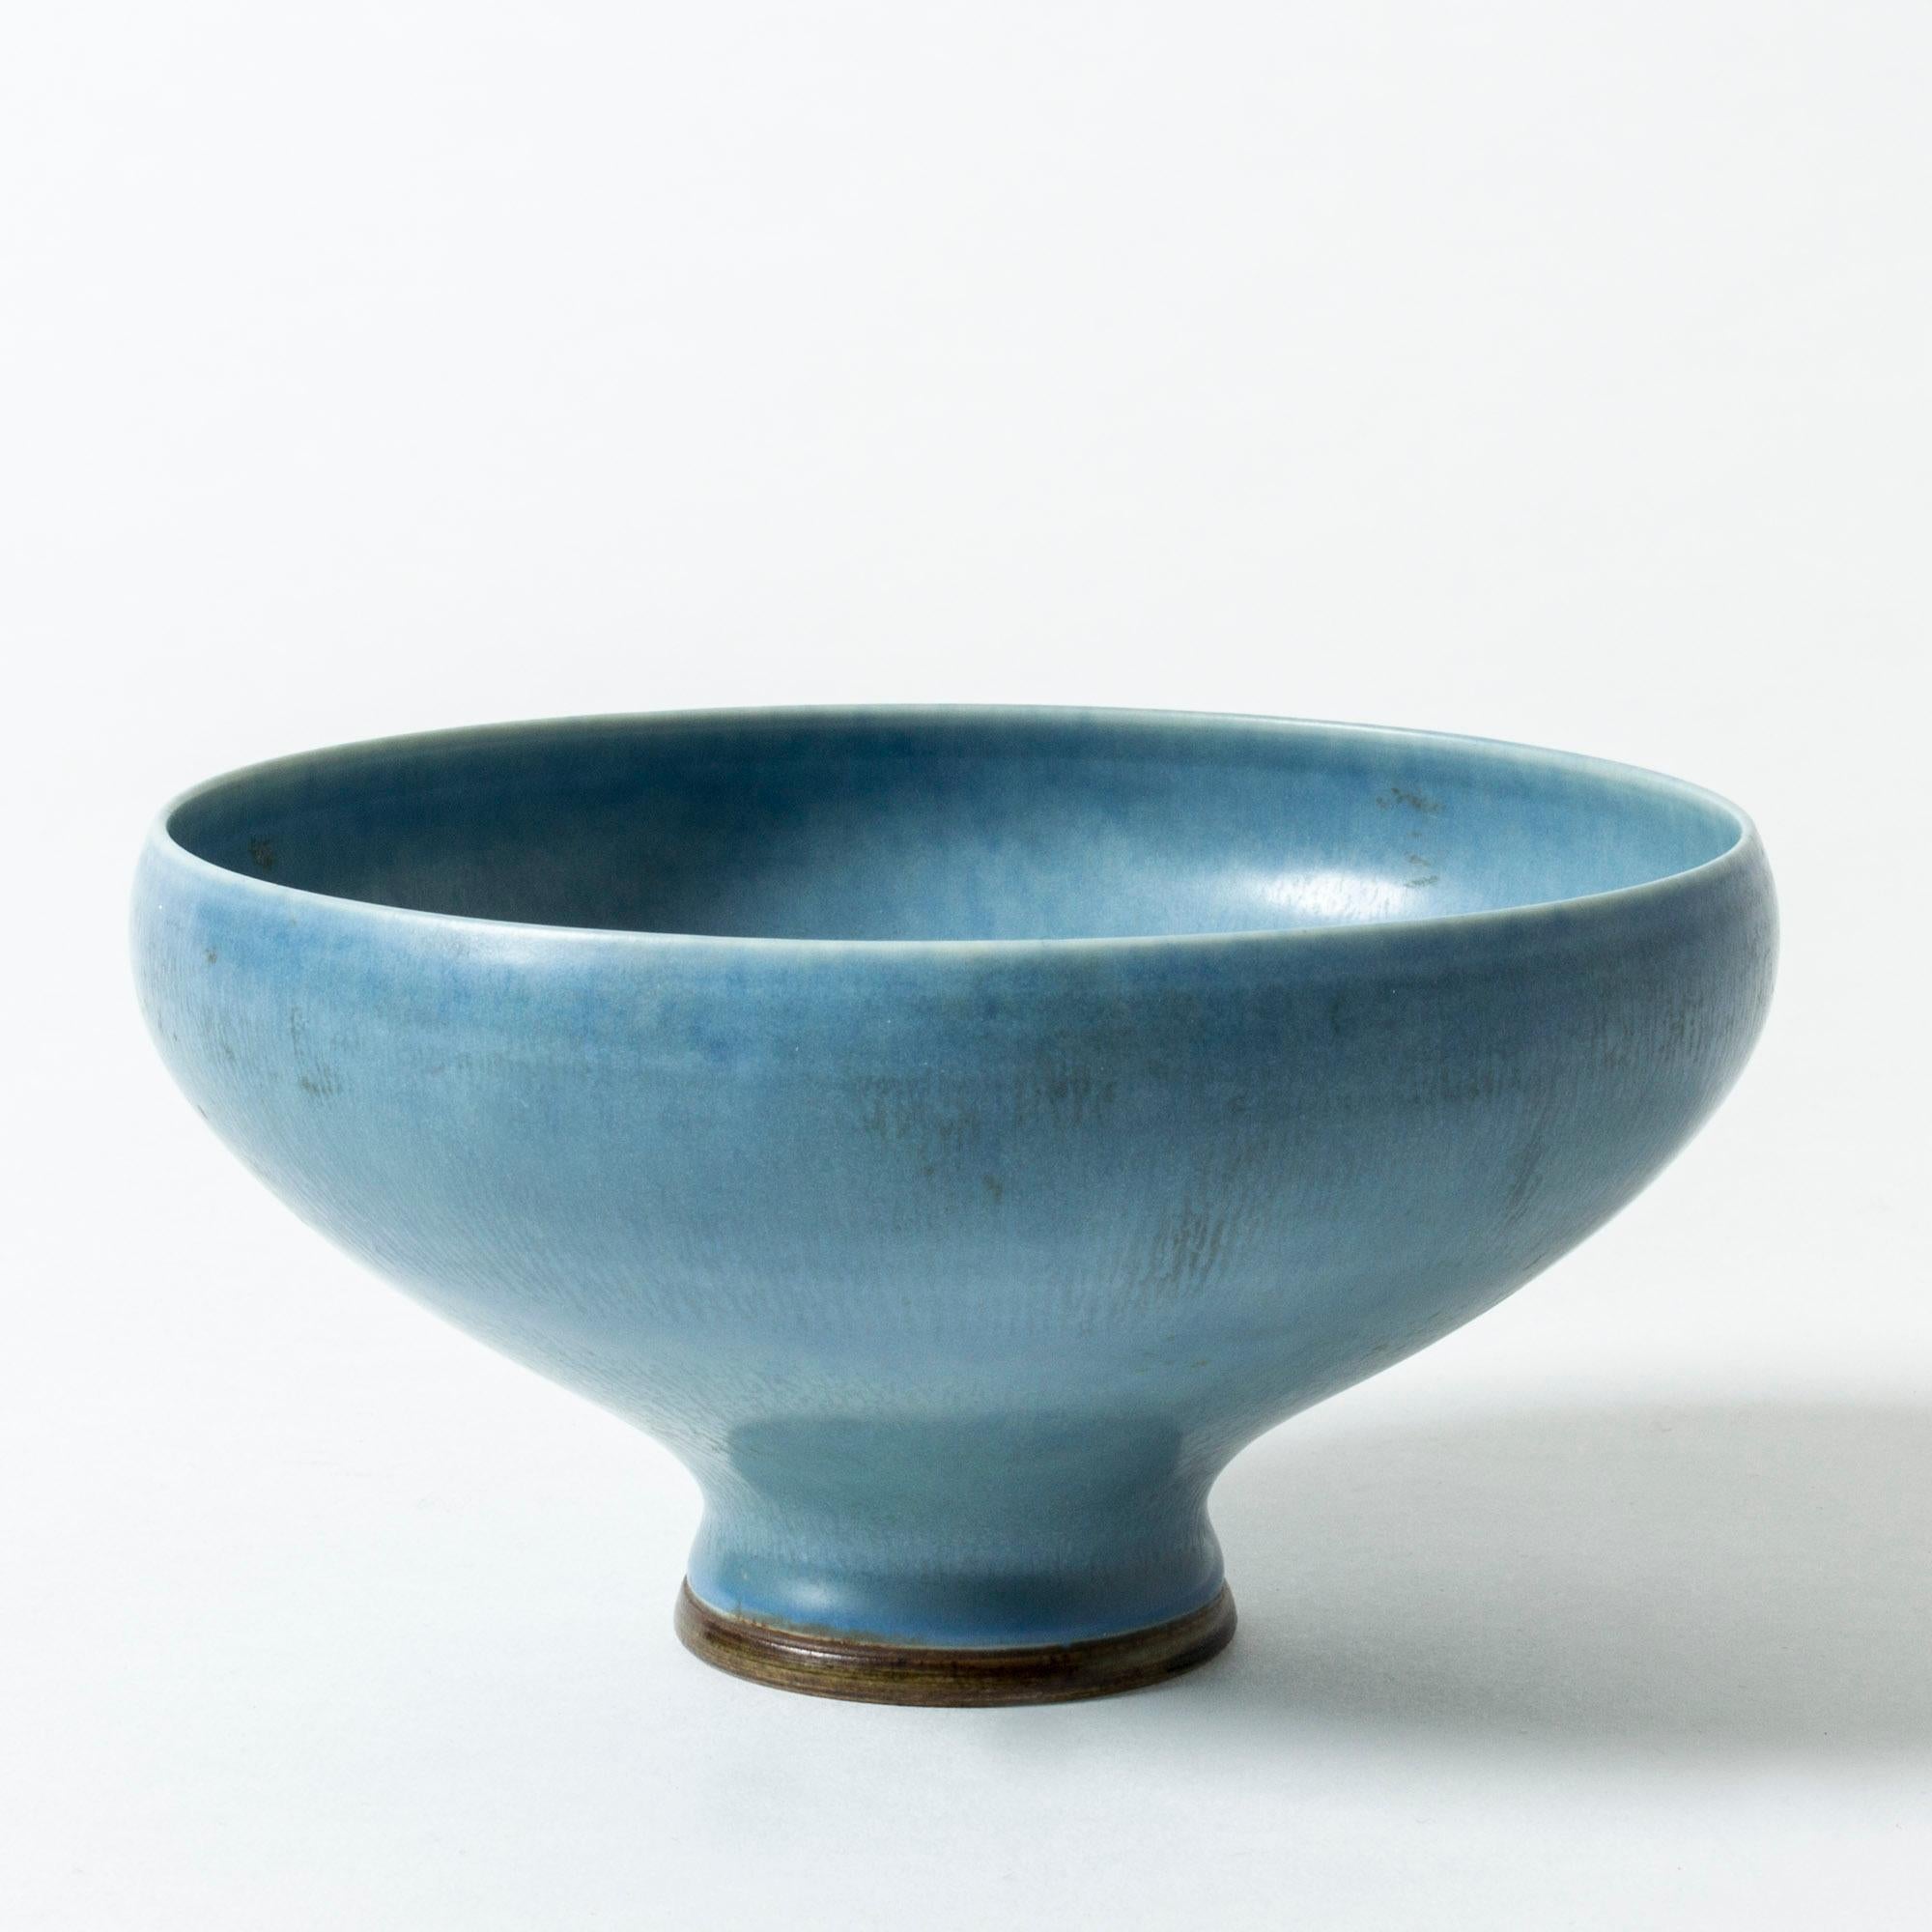 Elegant stoneware bowl by Berndt Friberg, with beautiful sky blue hare’s fur glaze.